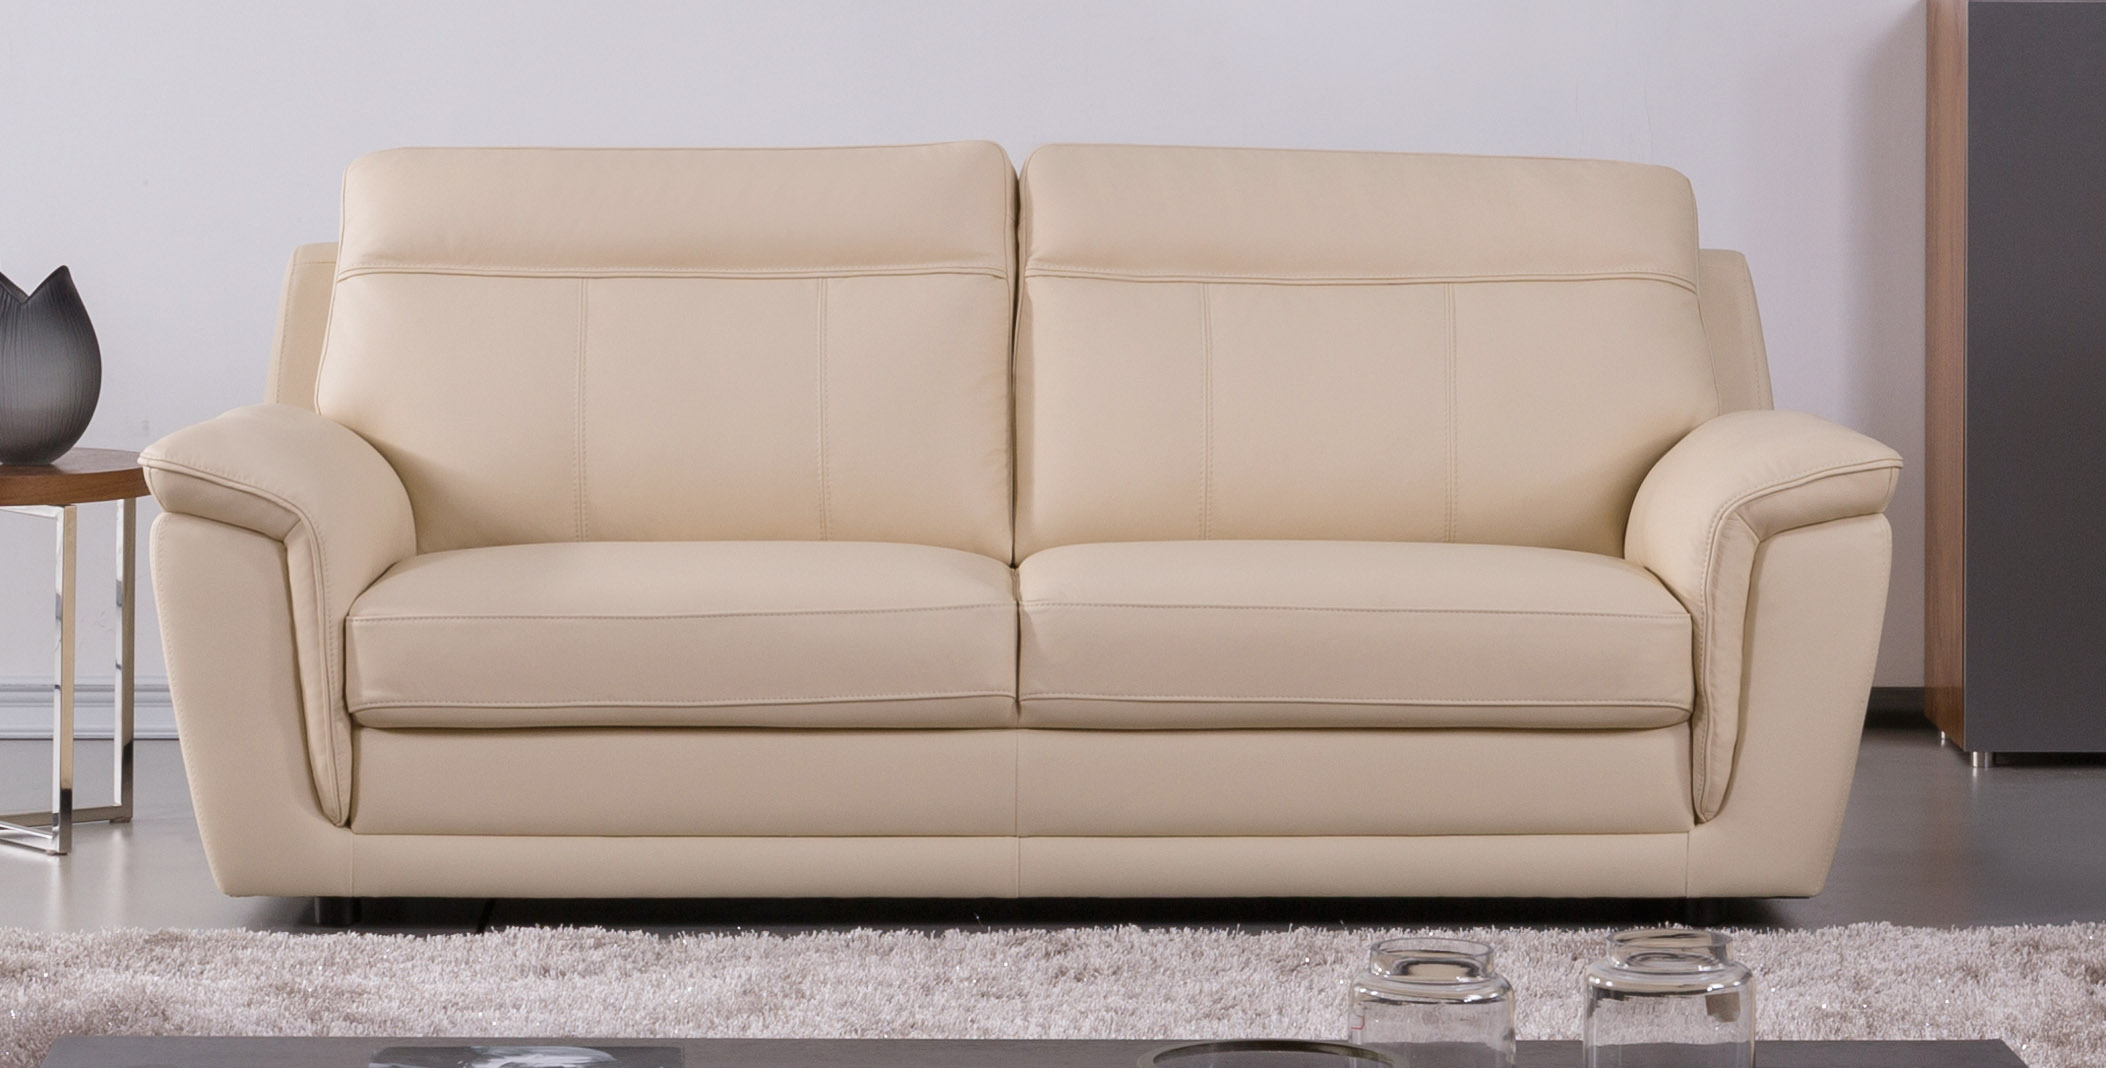 genuine leather sofa durability